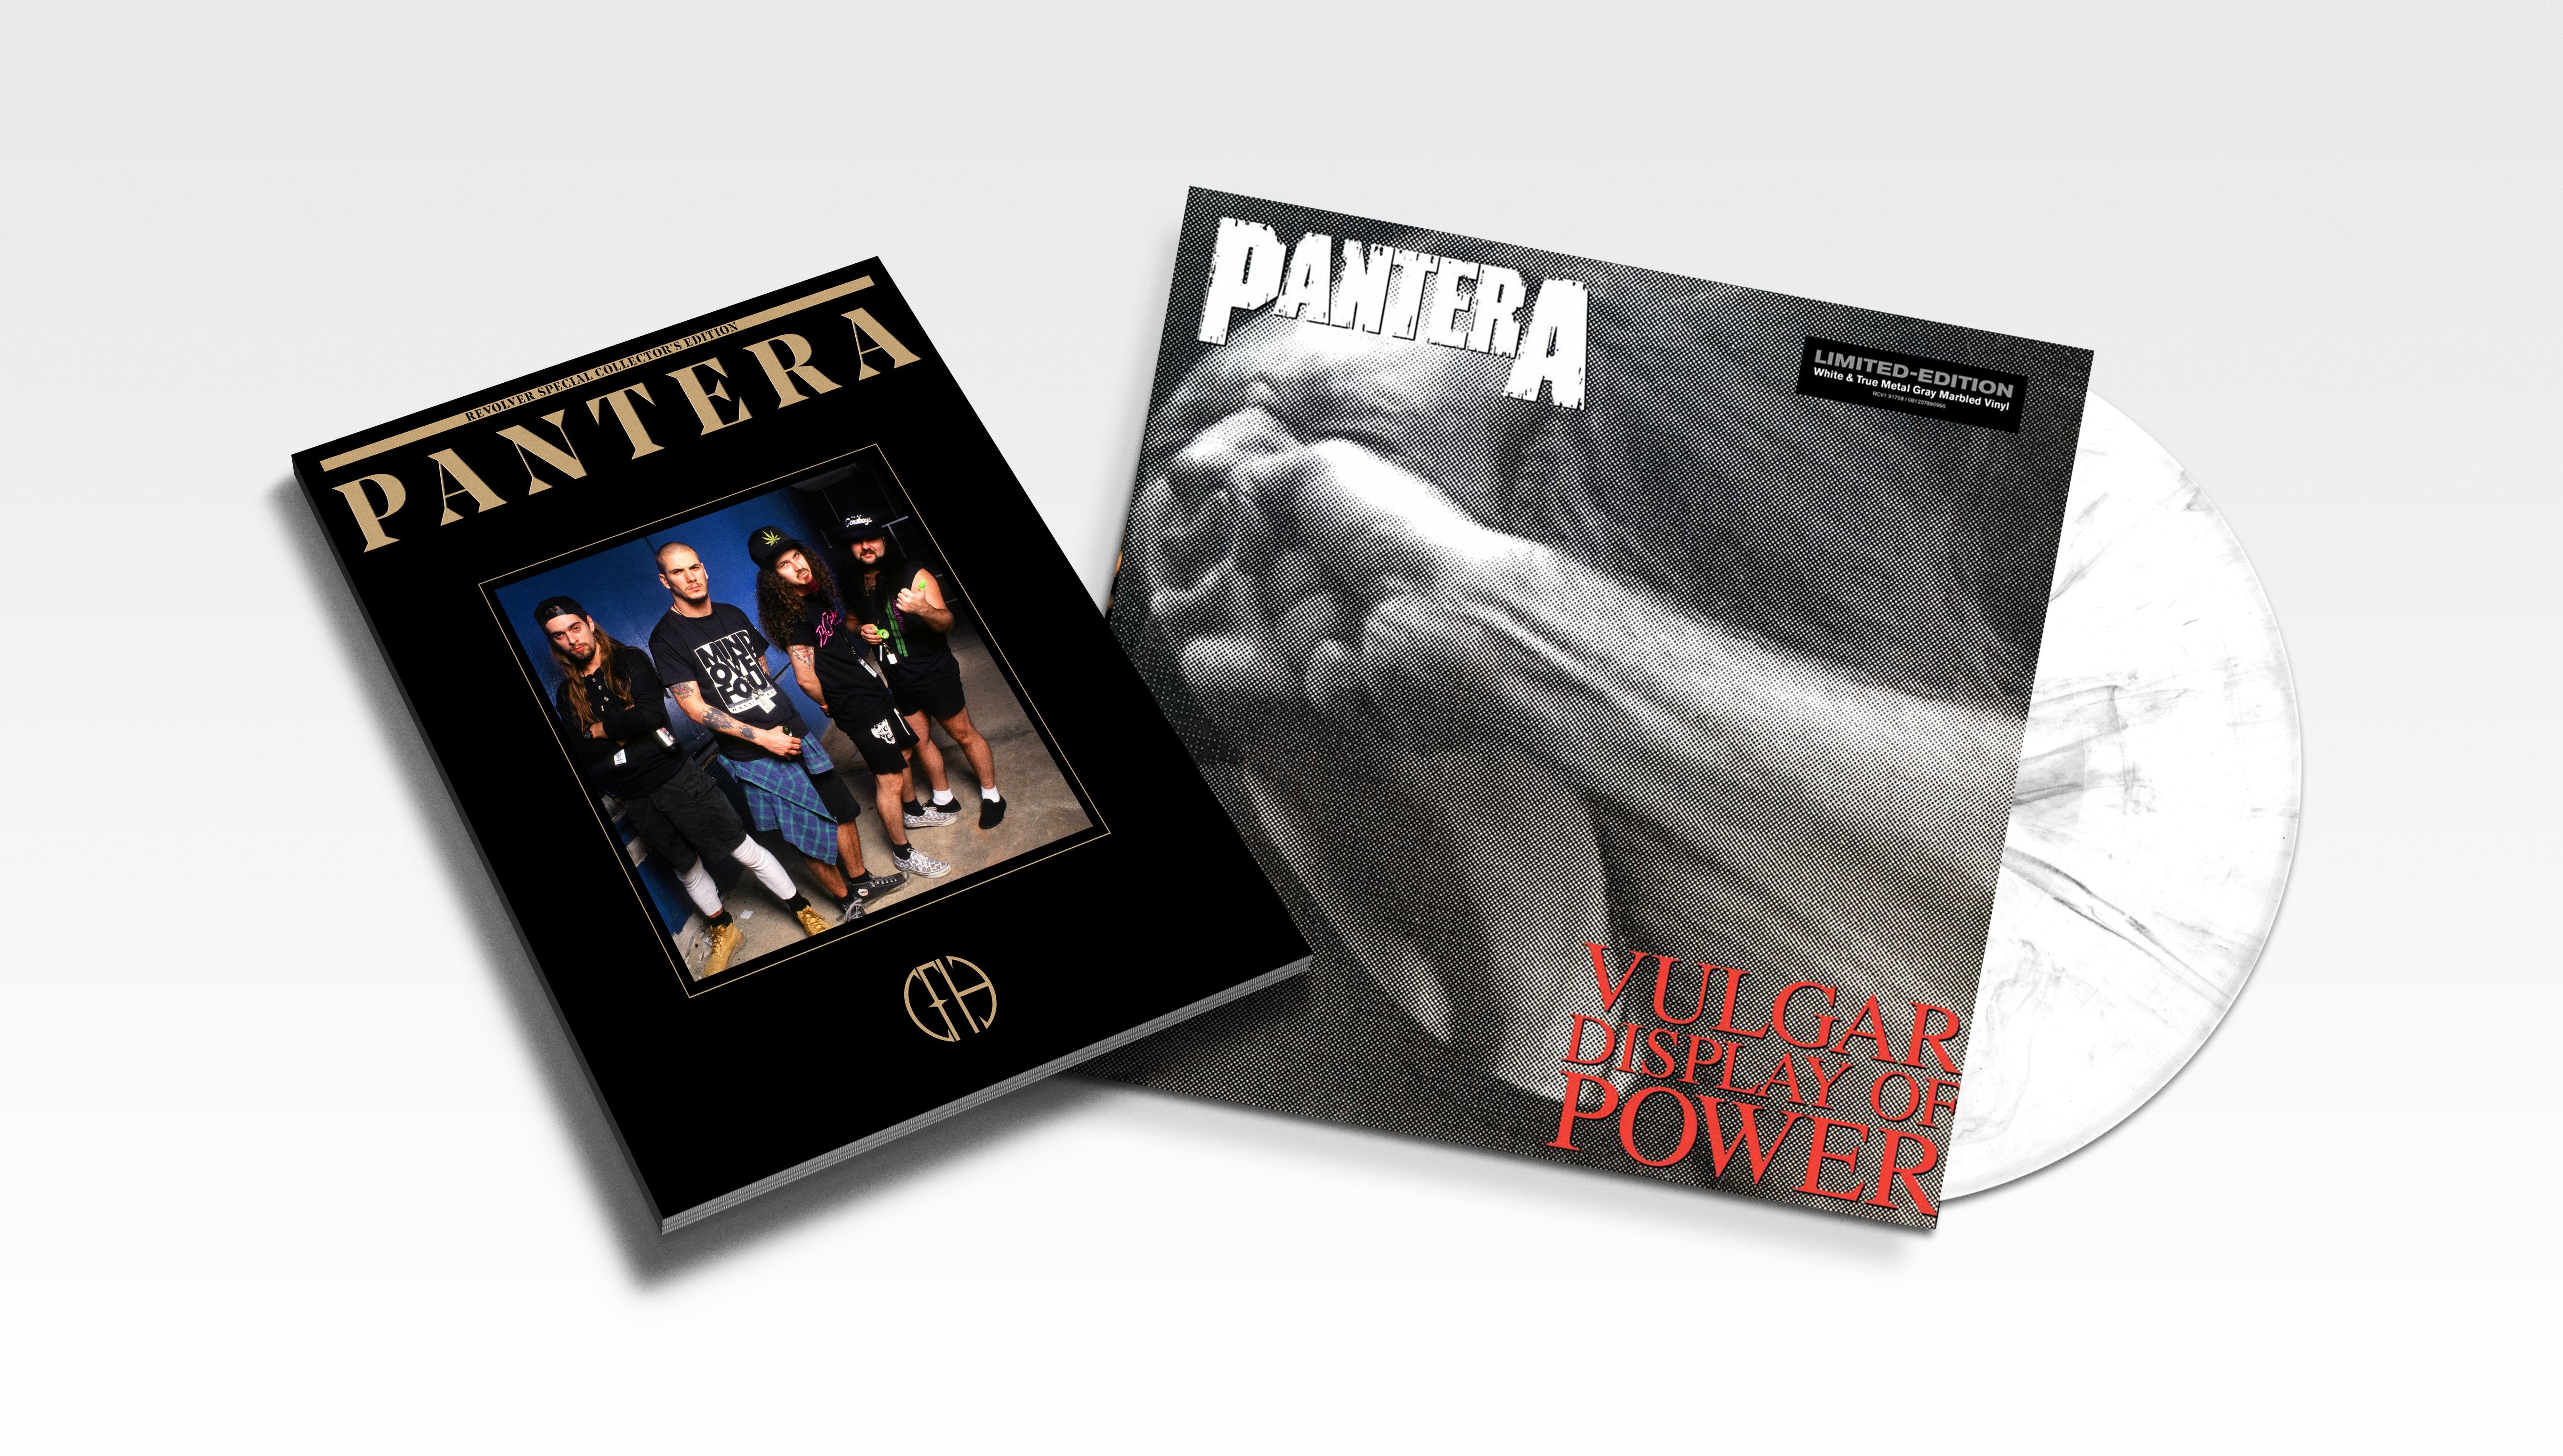 PANTERA 'VULGAR DISPLAY OF POWER' – LP + BOOK OF PANTERA SPECIAL COLLECTOR'S EDITION BUNDLE